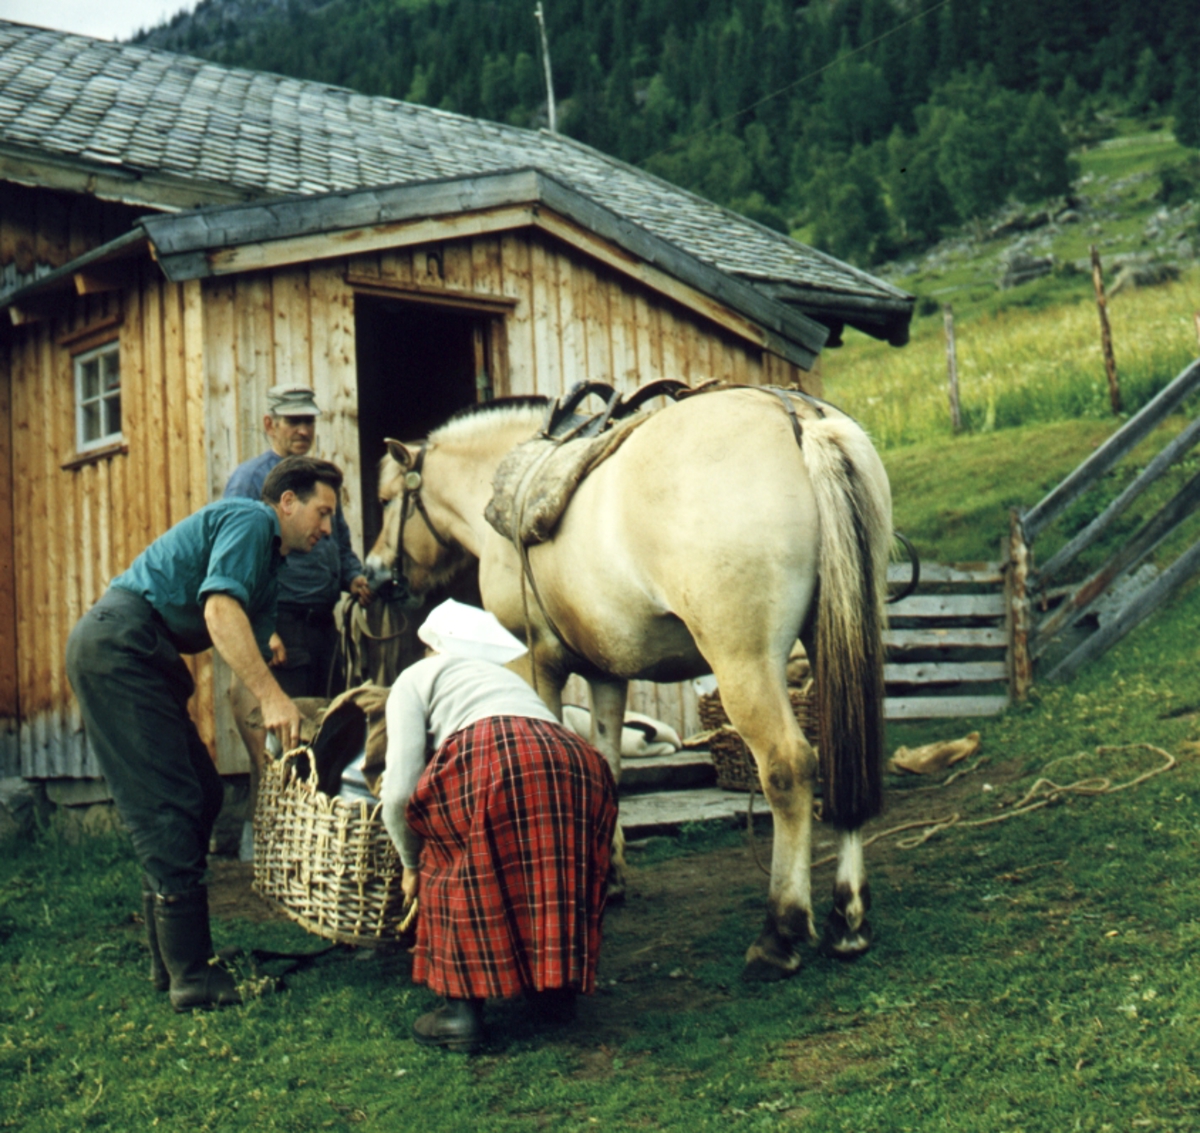 Buføring hos Eilif Hefte i Ål i Hallingdal, 1963. Mann og kvinne lesser kurver opp på en hest på gårdstunet.